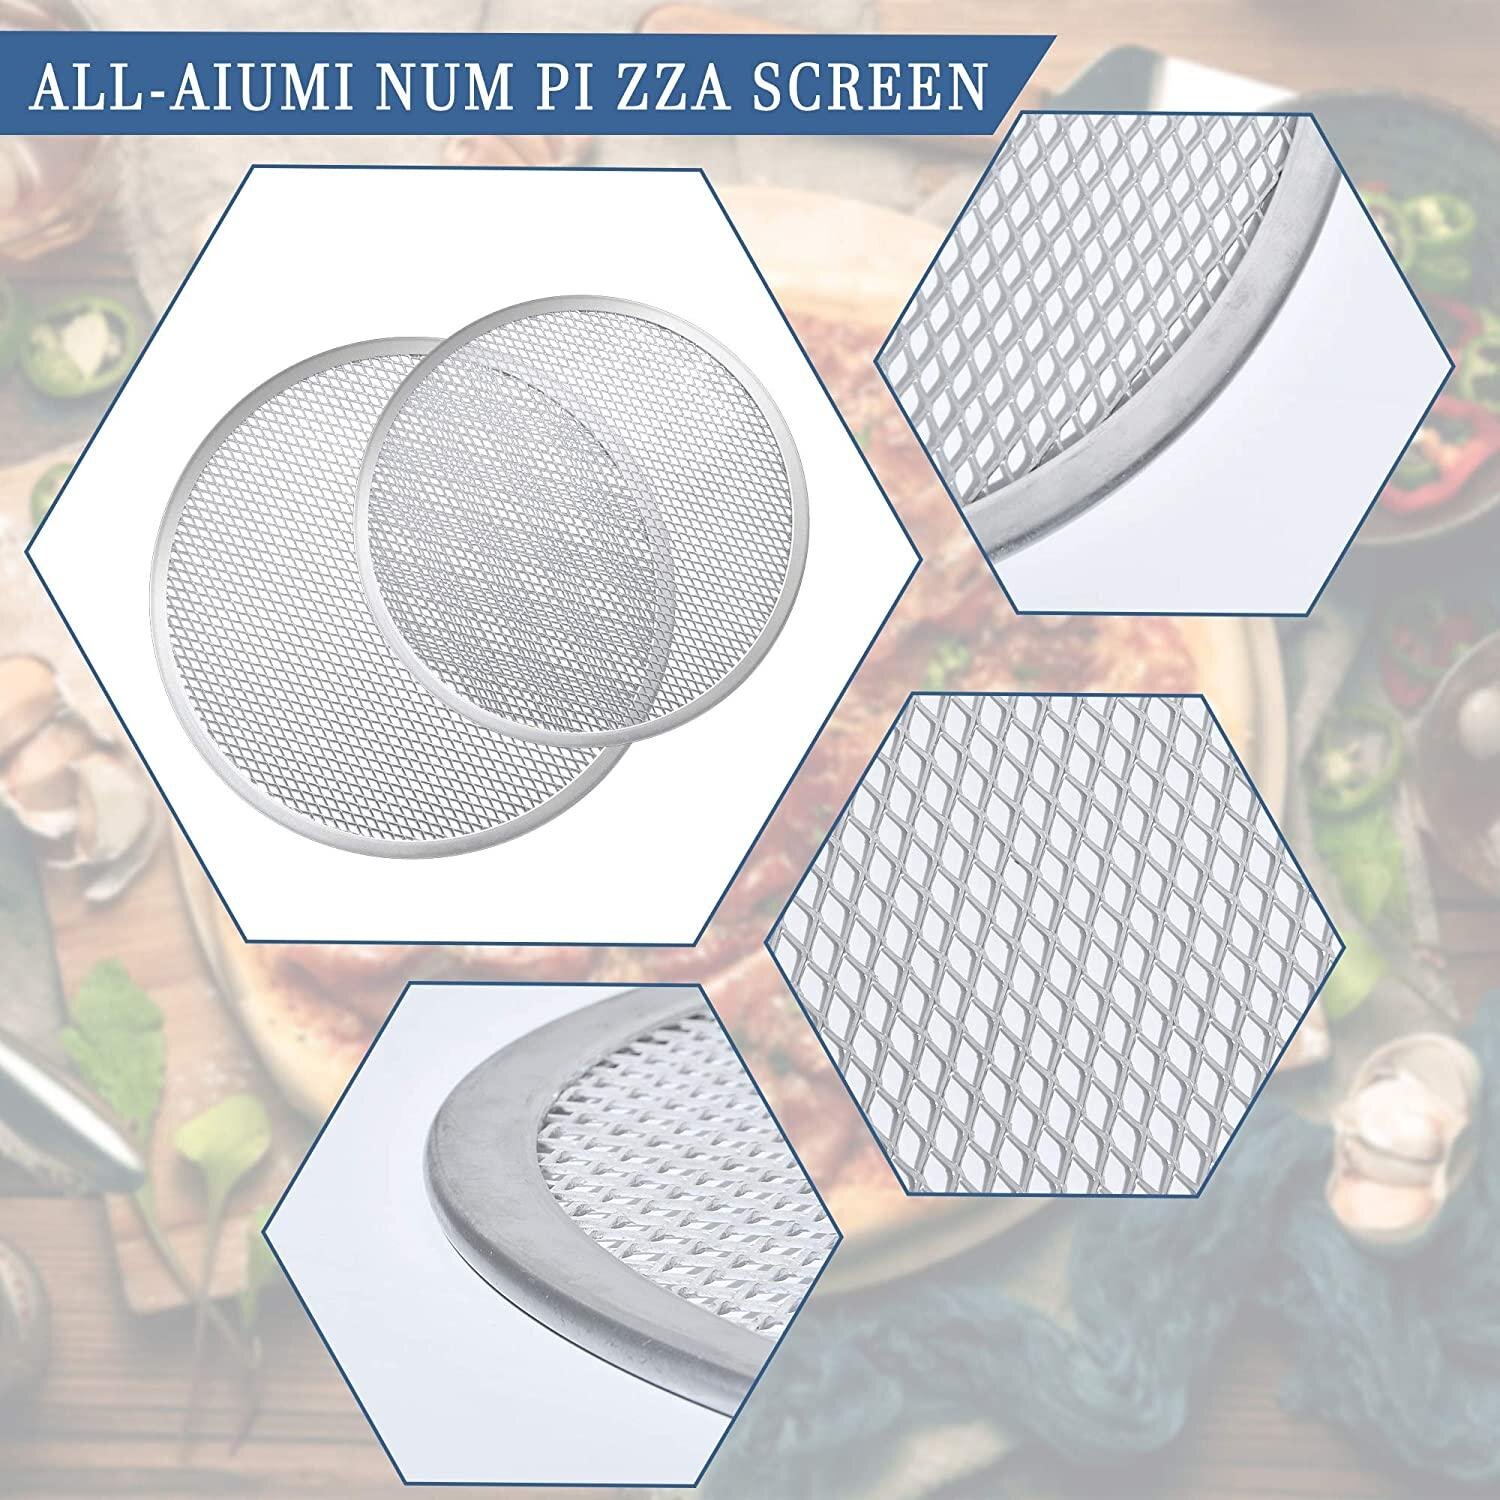 Pizza Screen Aluminium Seamless Rim Pizza Mesh Round Tray Oven Baking US 